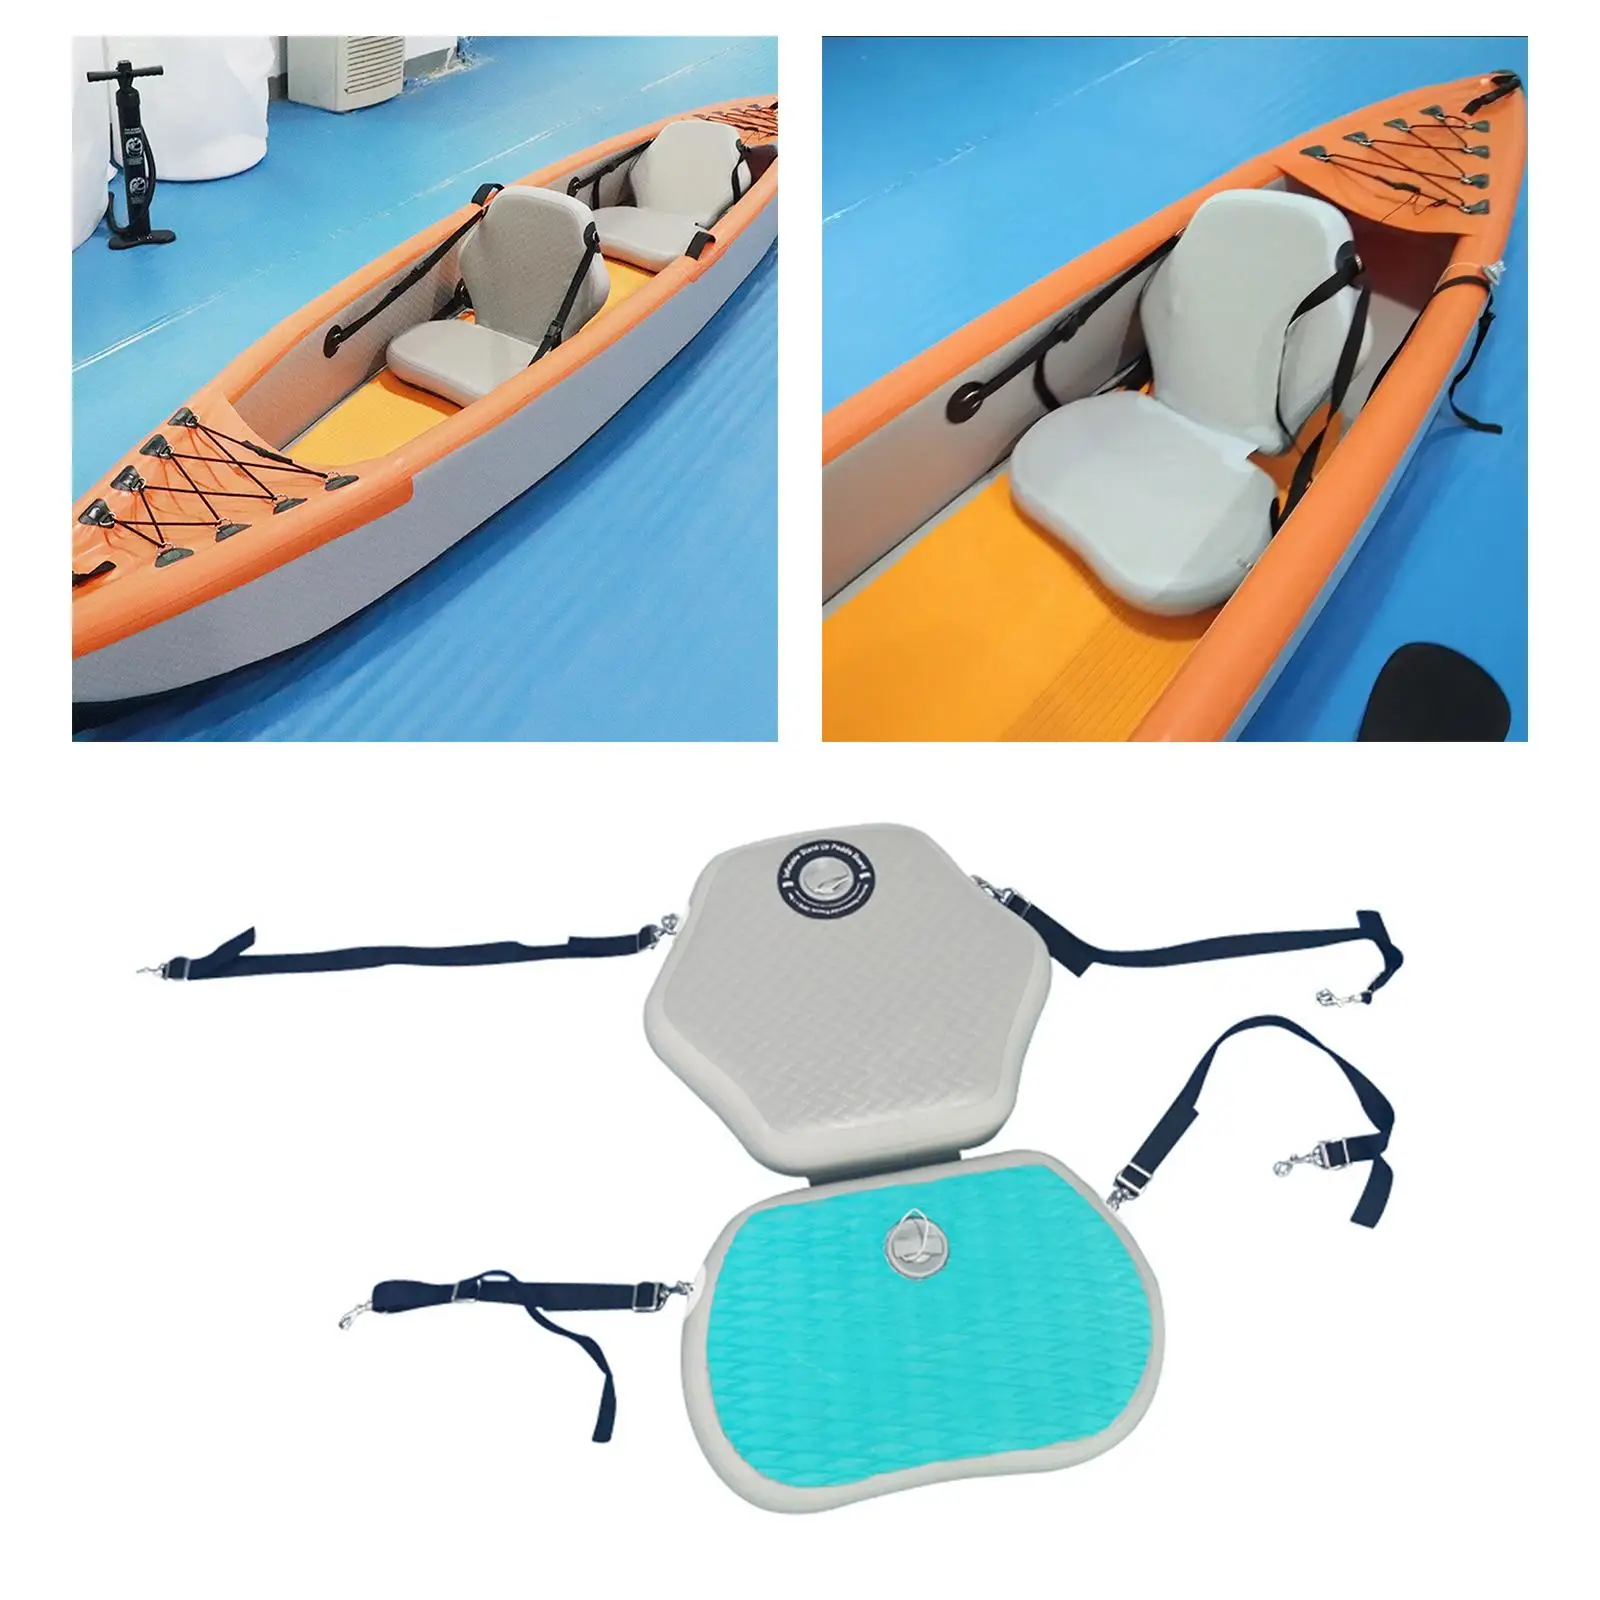 Kayak Seat Canoe Seat Adjustable Boat Seat Fishing Seat Comfortable Backrest Support Detachable for Universal Sit